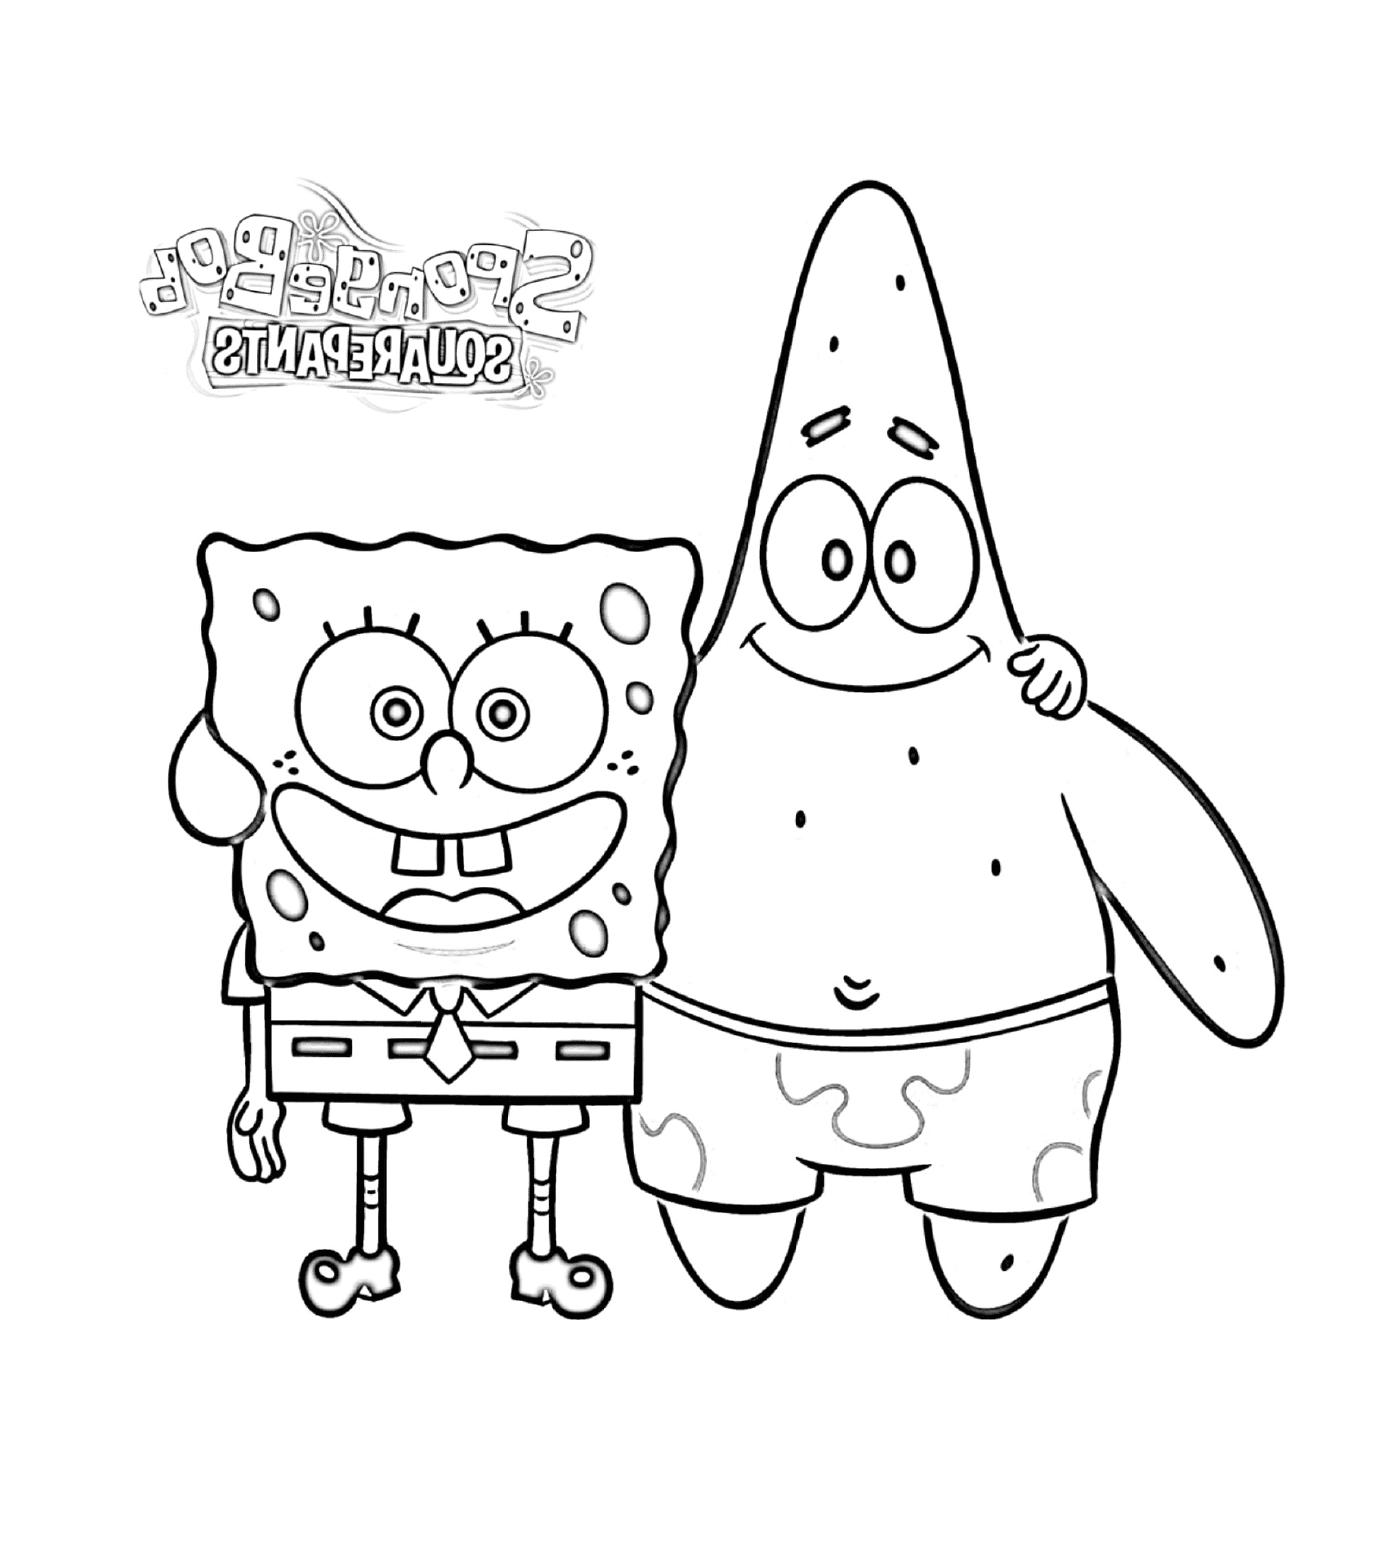  Spongebob and Patrick, friends 